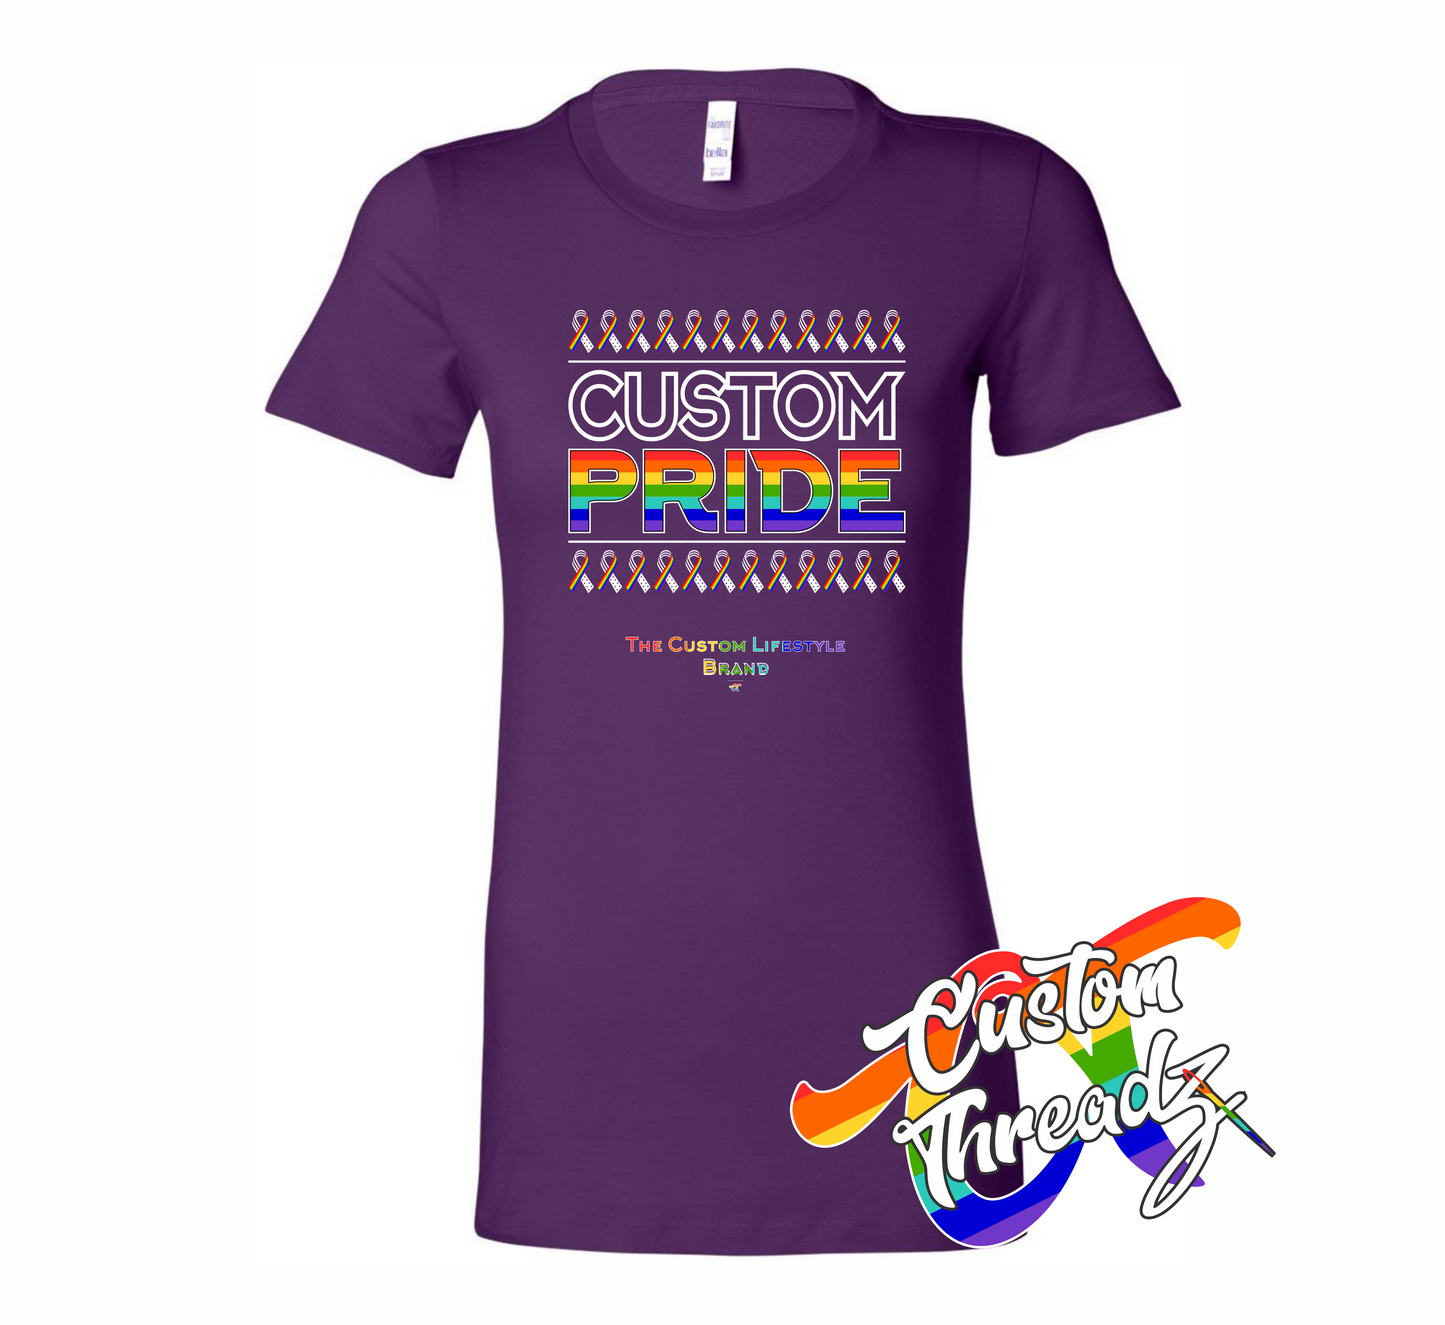 purple womens tee with custom pride rainbow DTG printed design